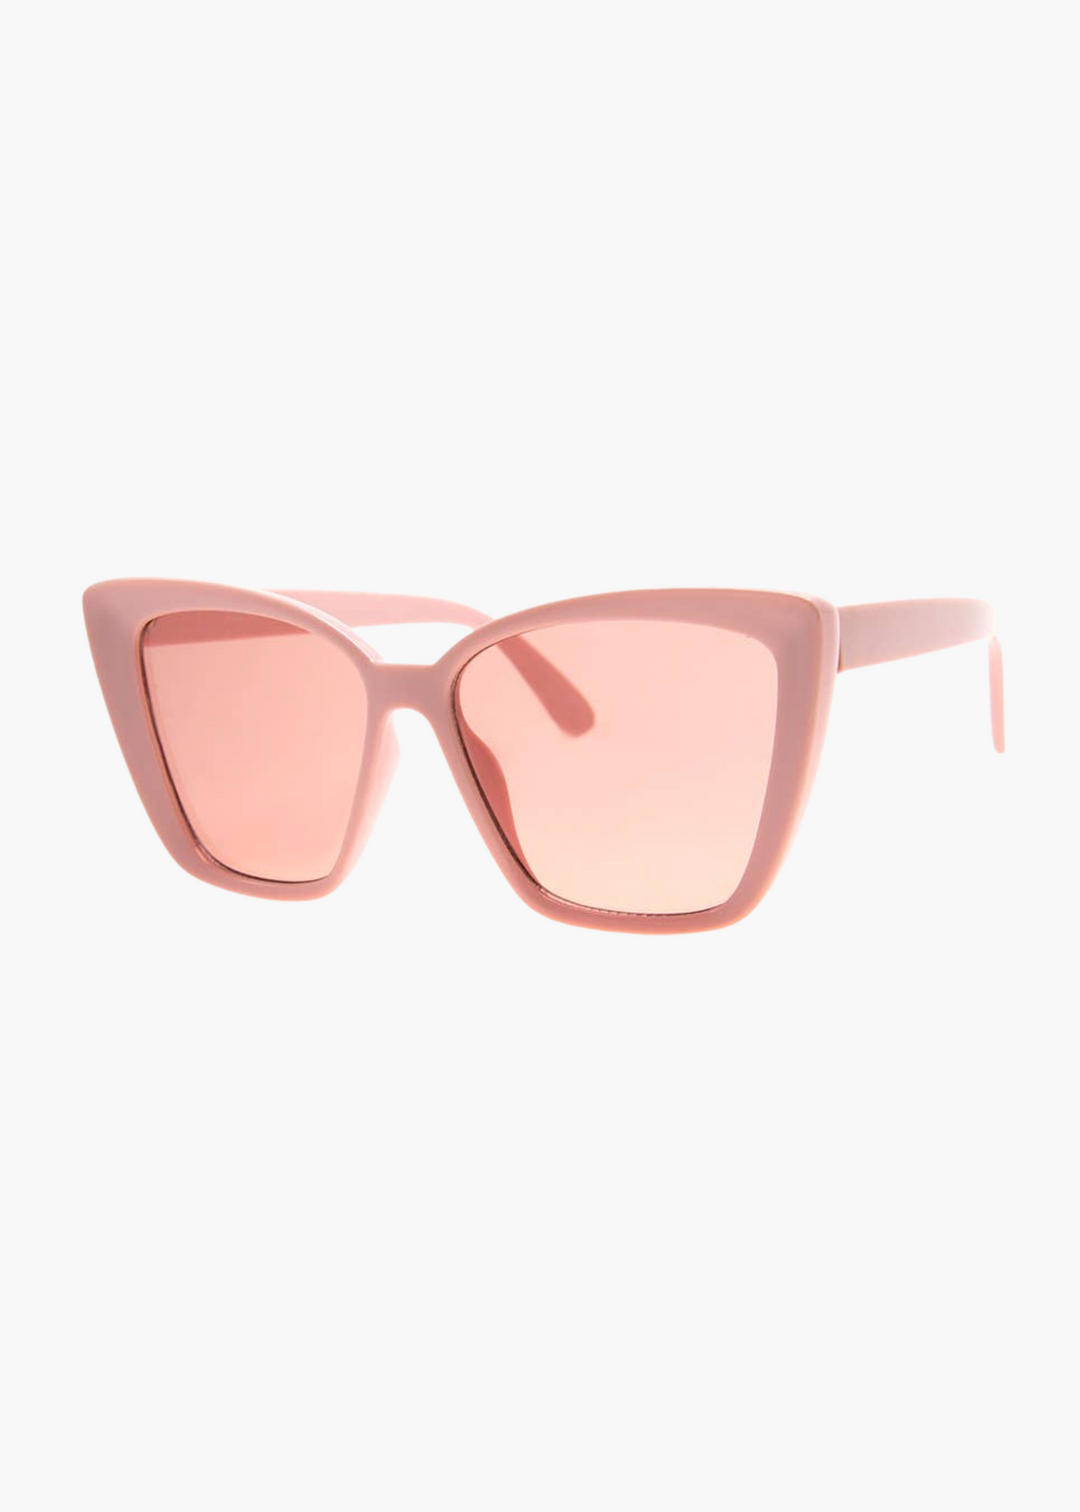 Oversized Cat Eye Sunglasses in Pink